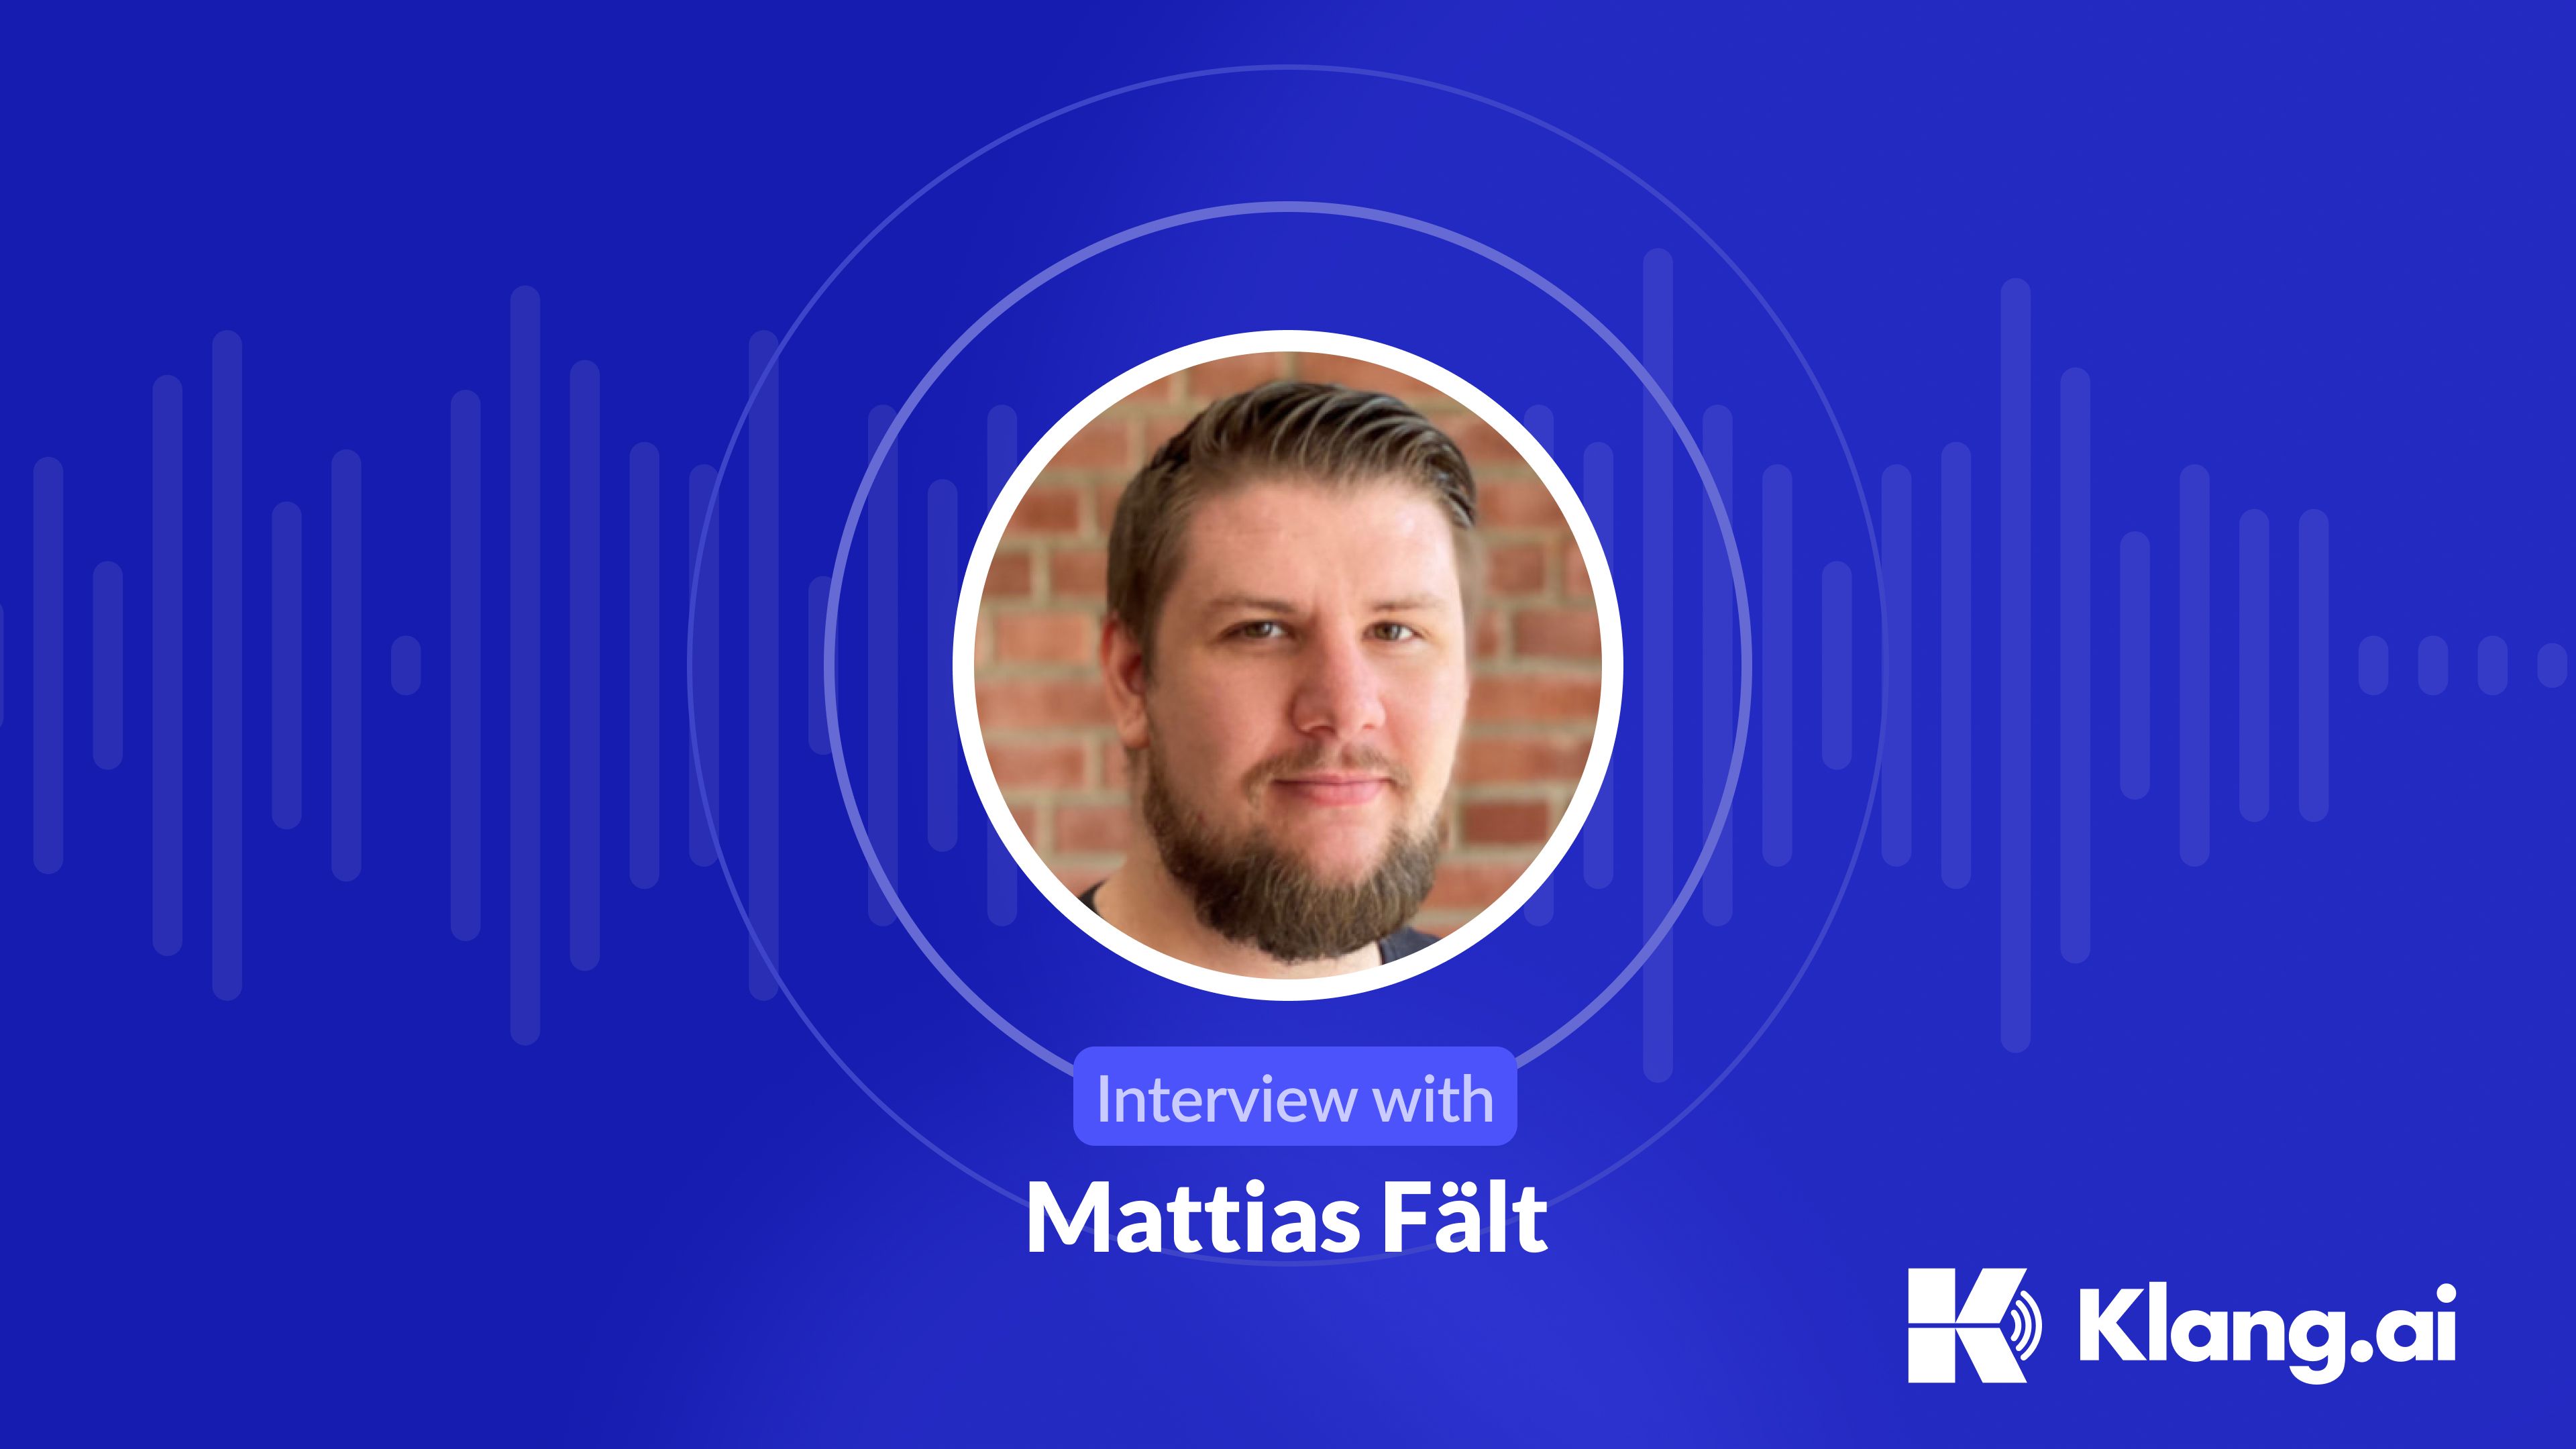 An interview with Mattias - The mathematician behind Klang.ai 